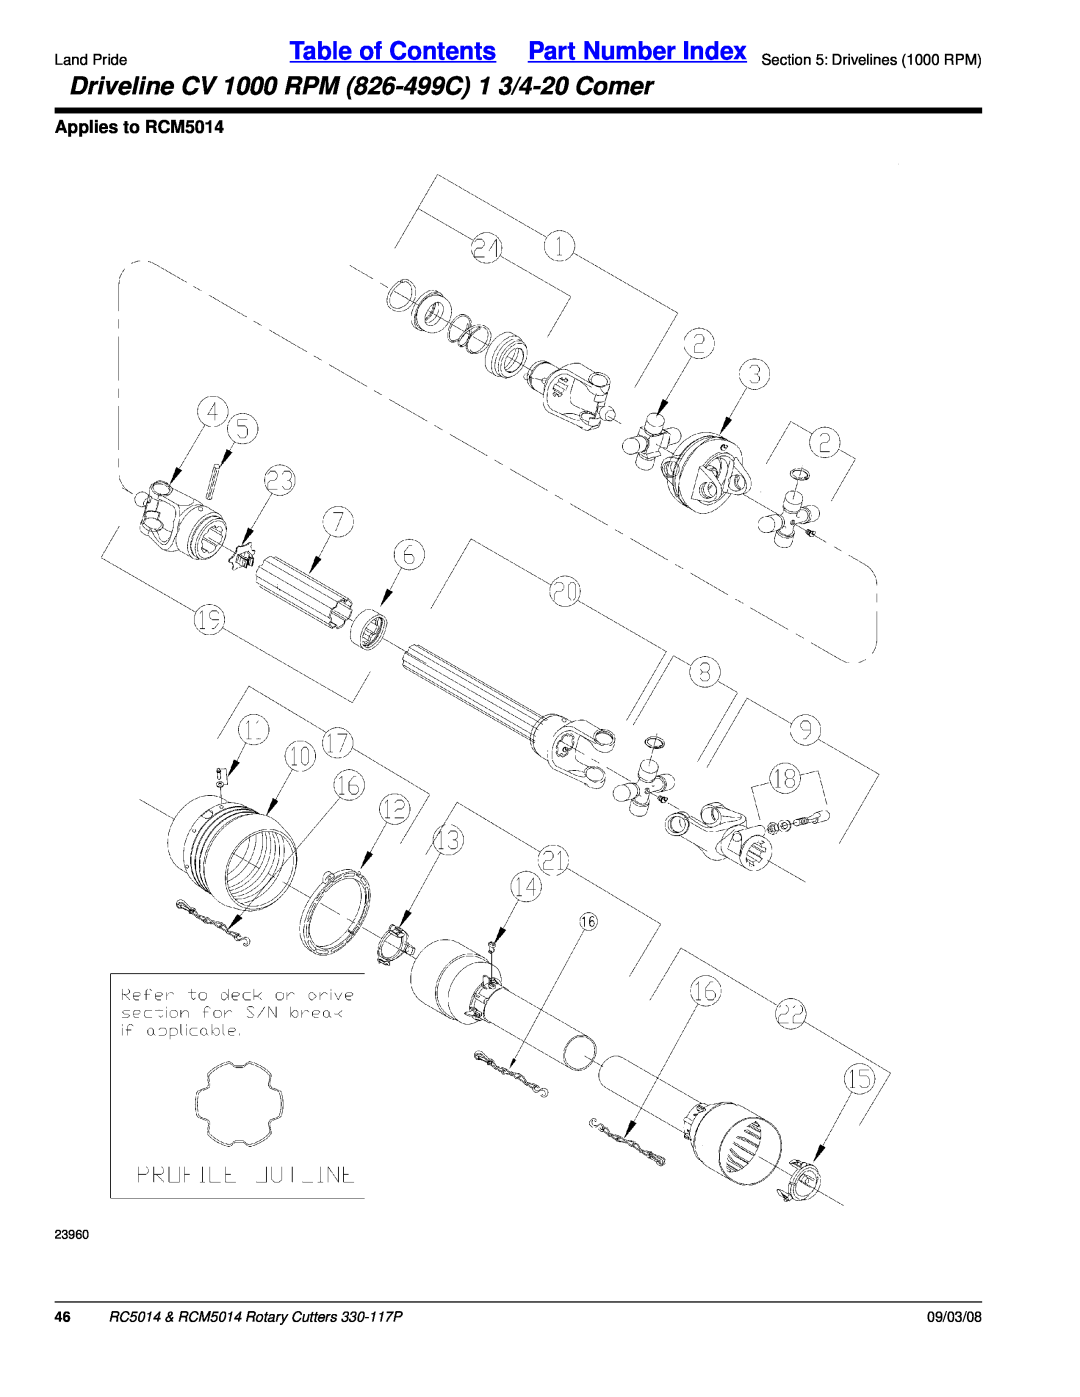 Land Pride RC5014 manual Driveline CV 1000 RPM 826-499C1 3/4-20Comer, Applies to RCM5014, 09/03/08 